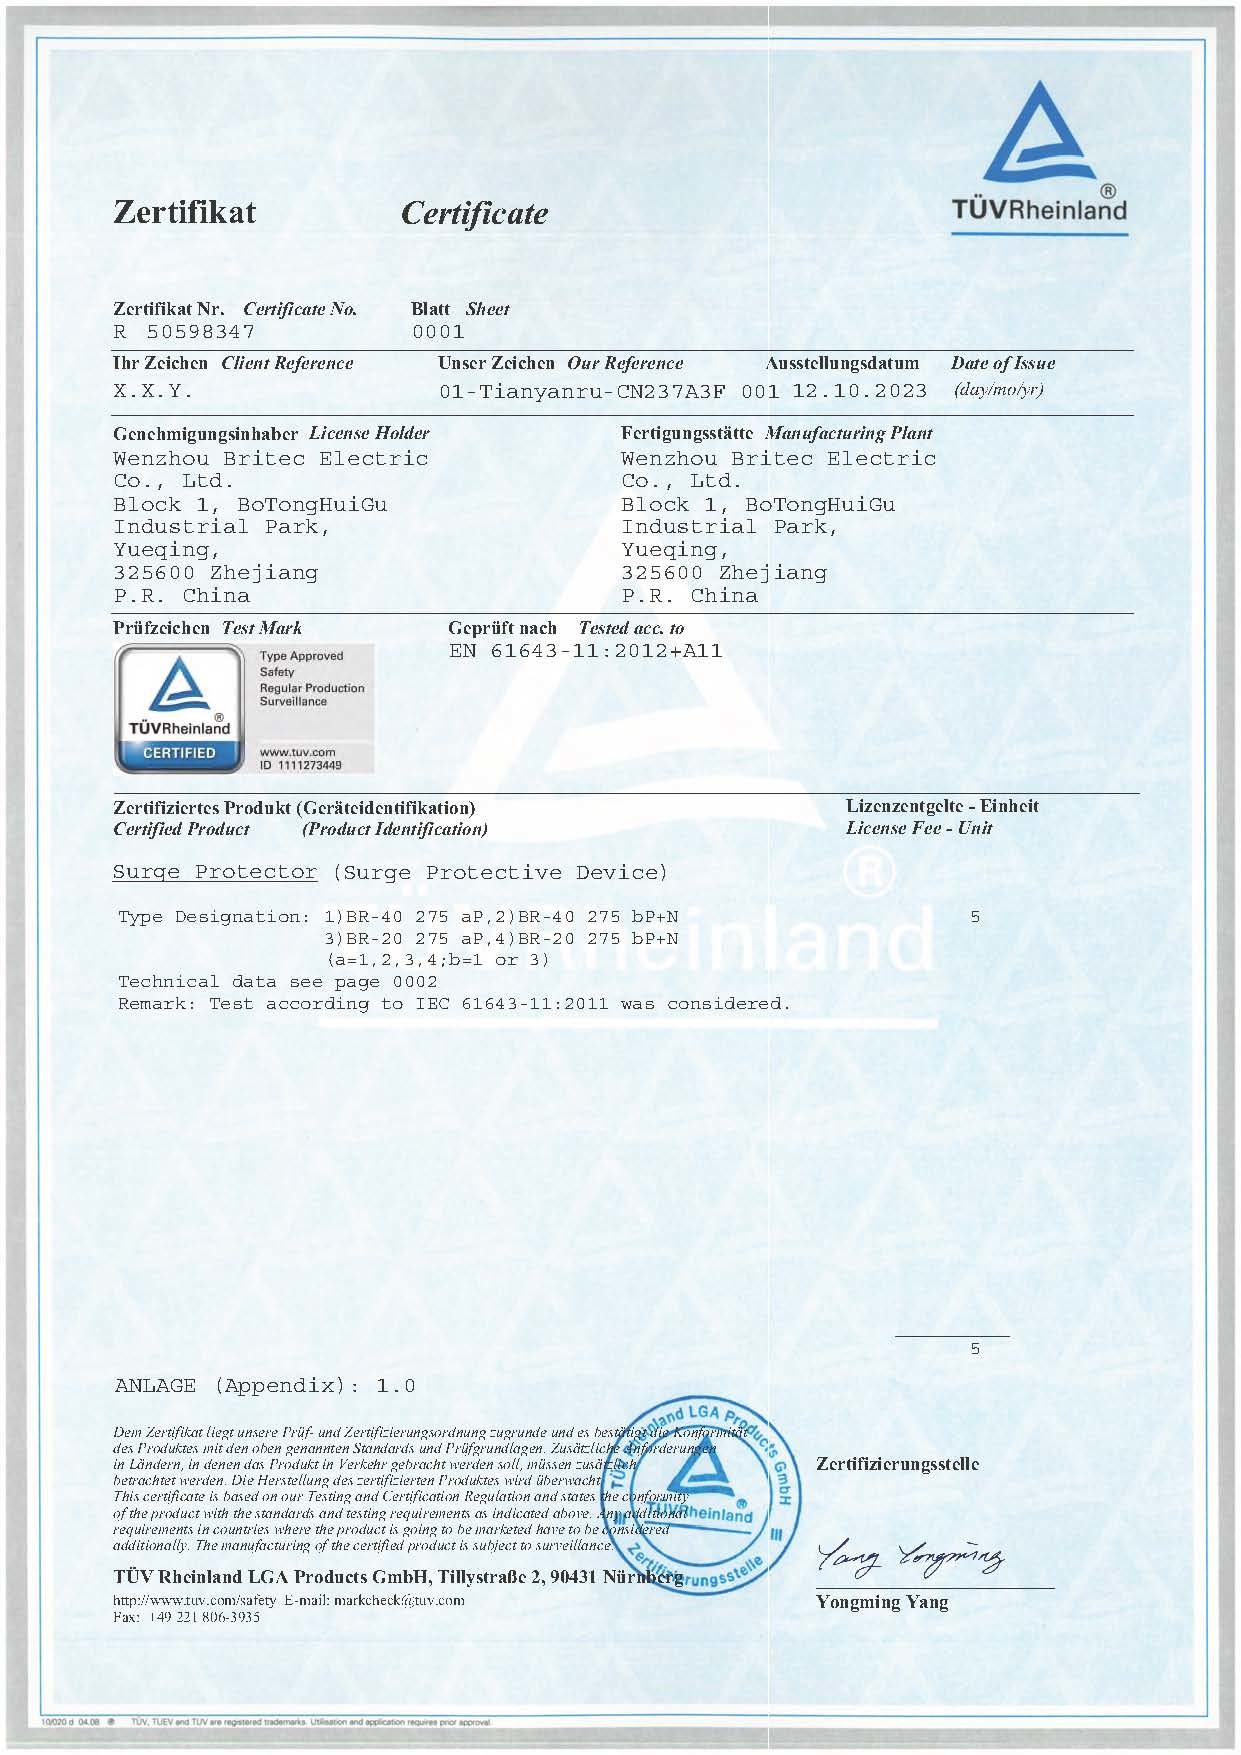 Porcelana Britec Electric Co., Ltd. Certificaciones